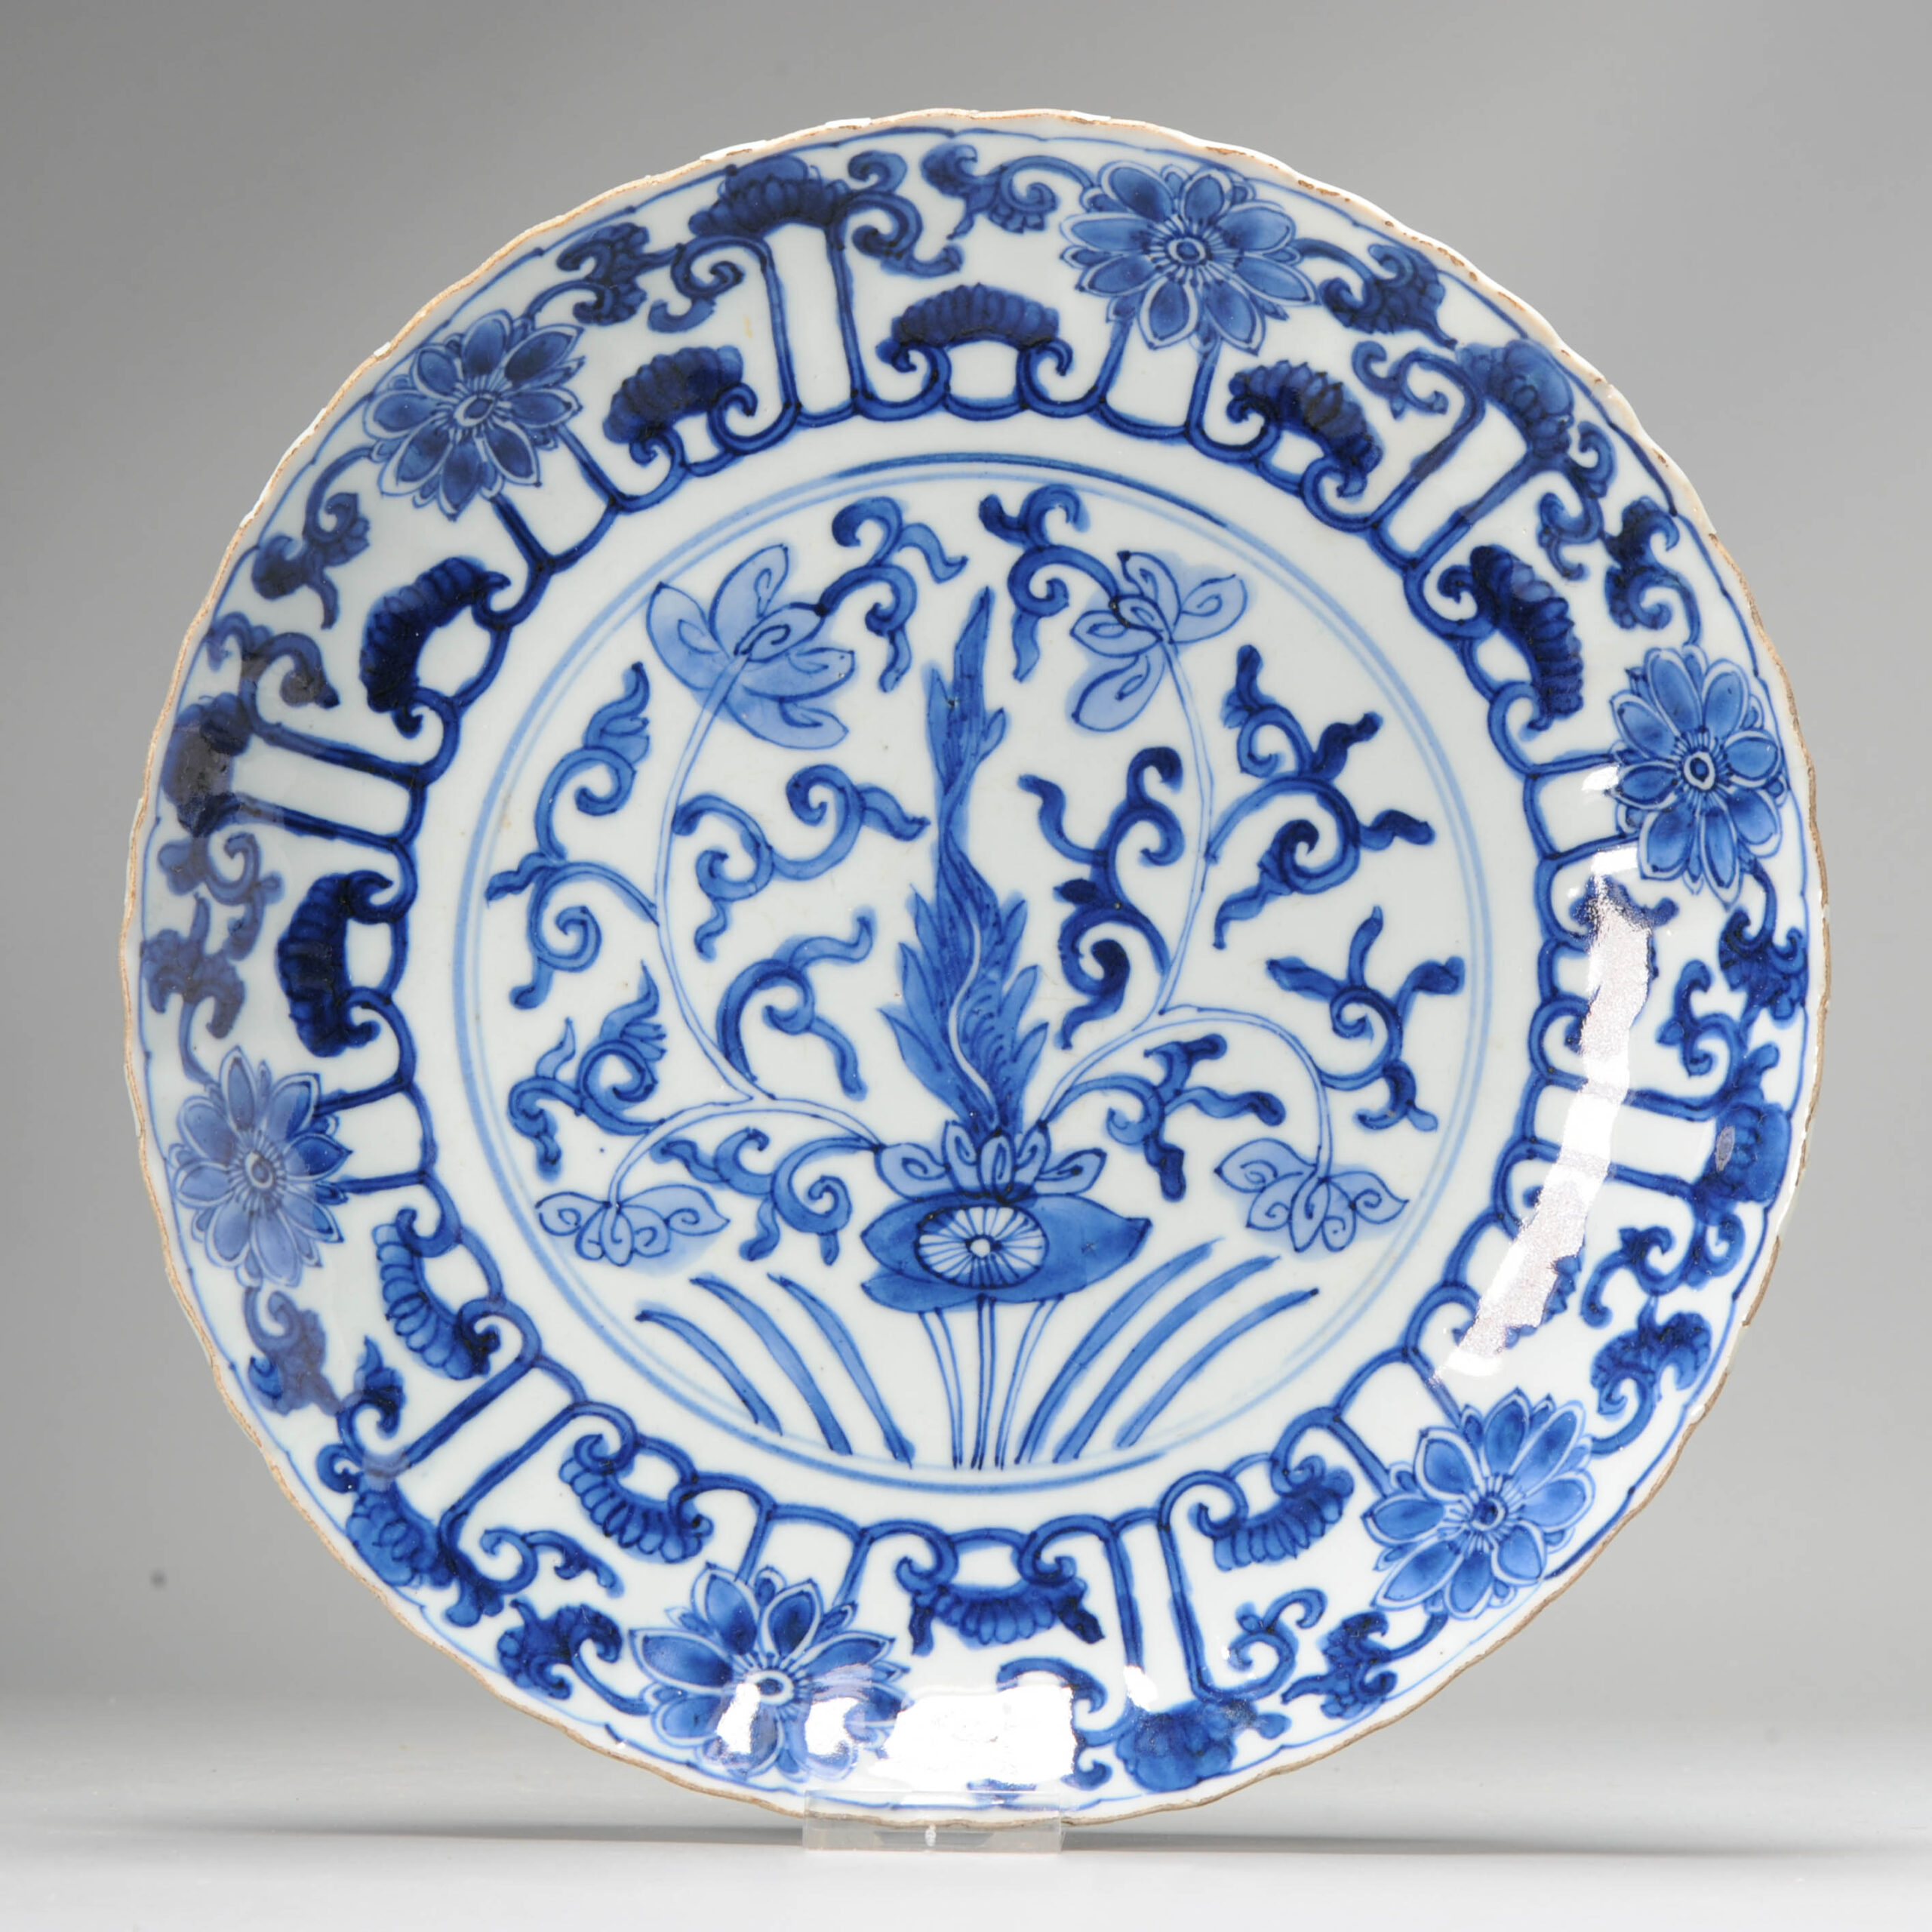 27CM Antique Chinese Porcelain Ca 1700 Kangxi period Period Lotus Pond Plate